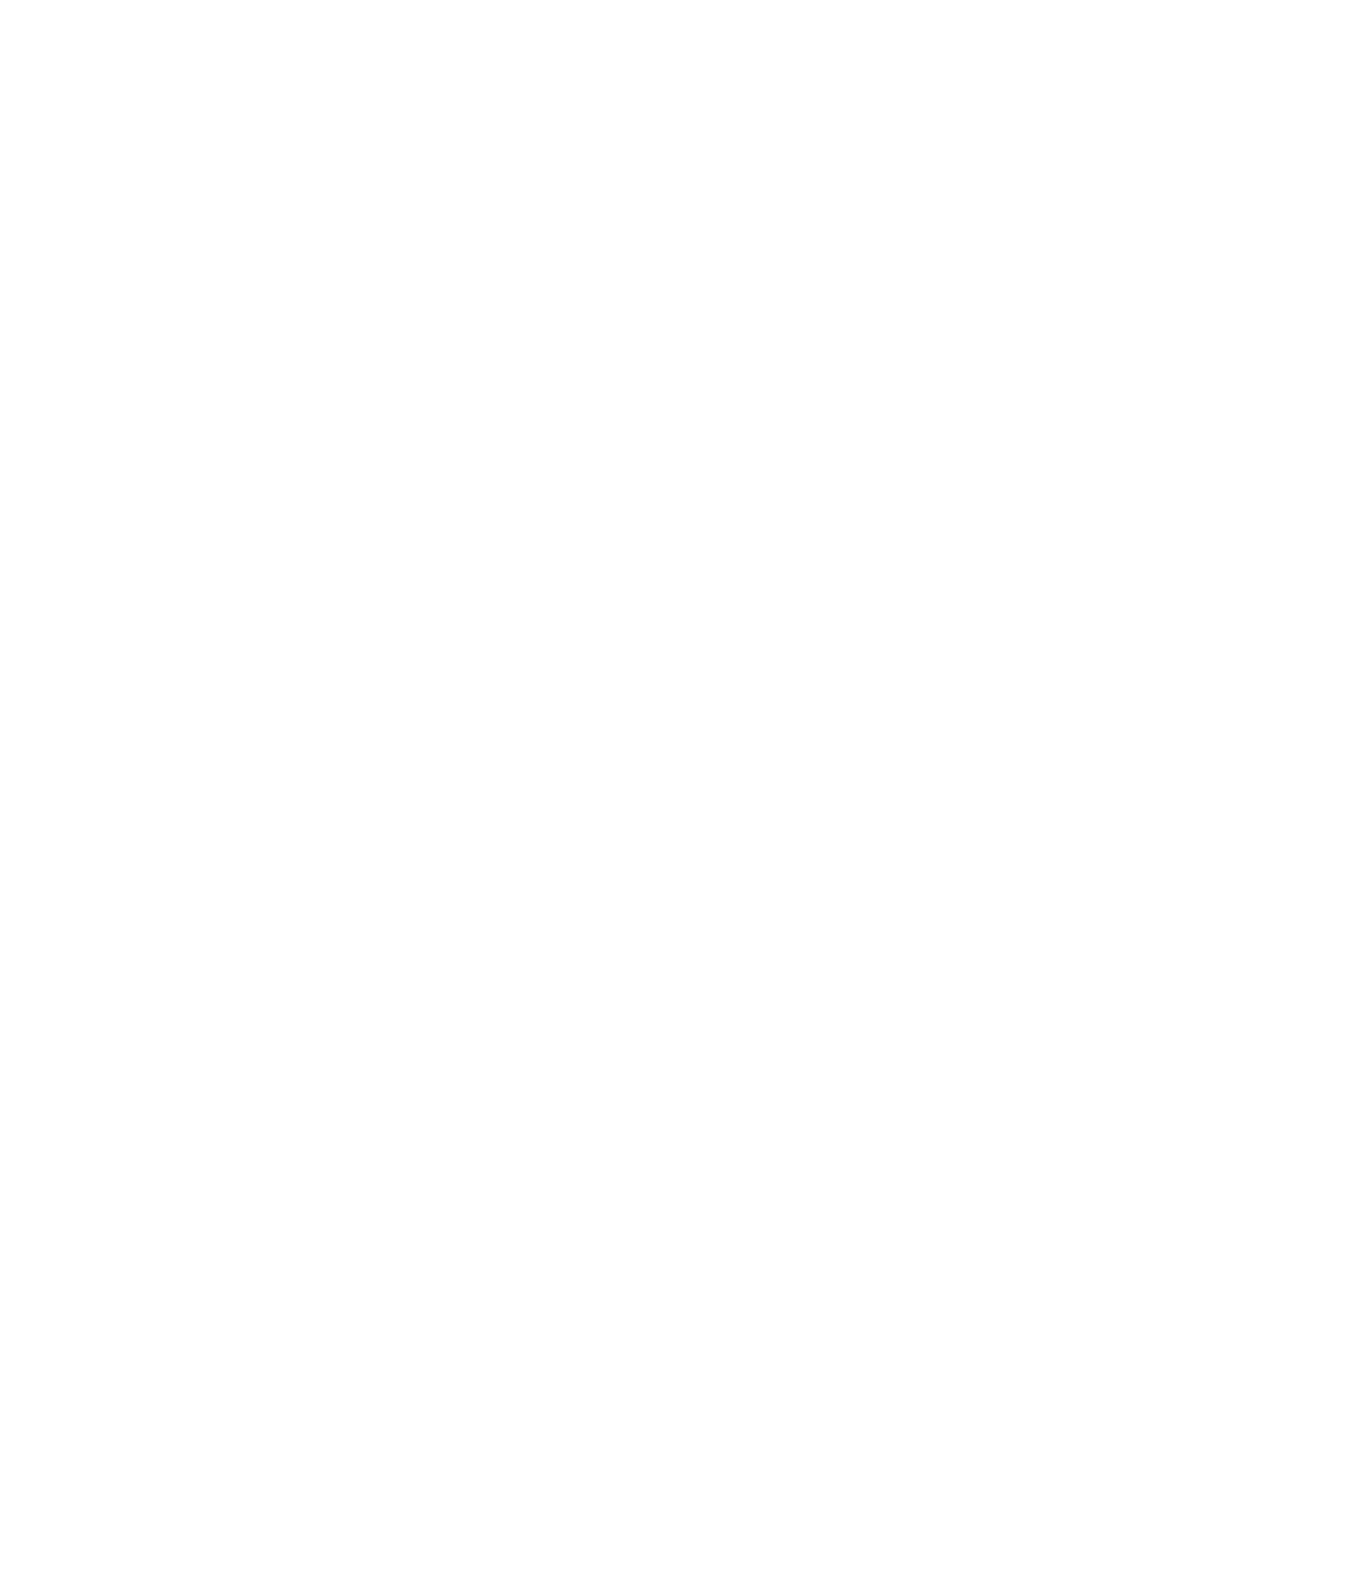 Leapmotor logo pour fonds sombres (PNG transparent)